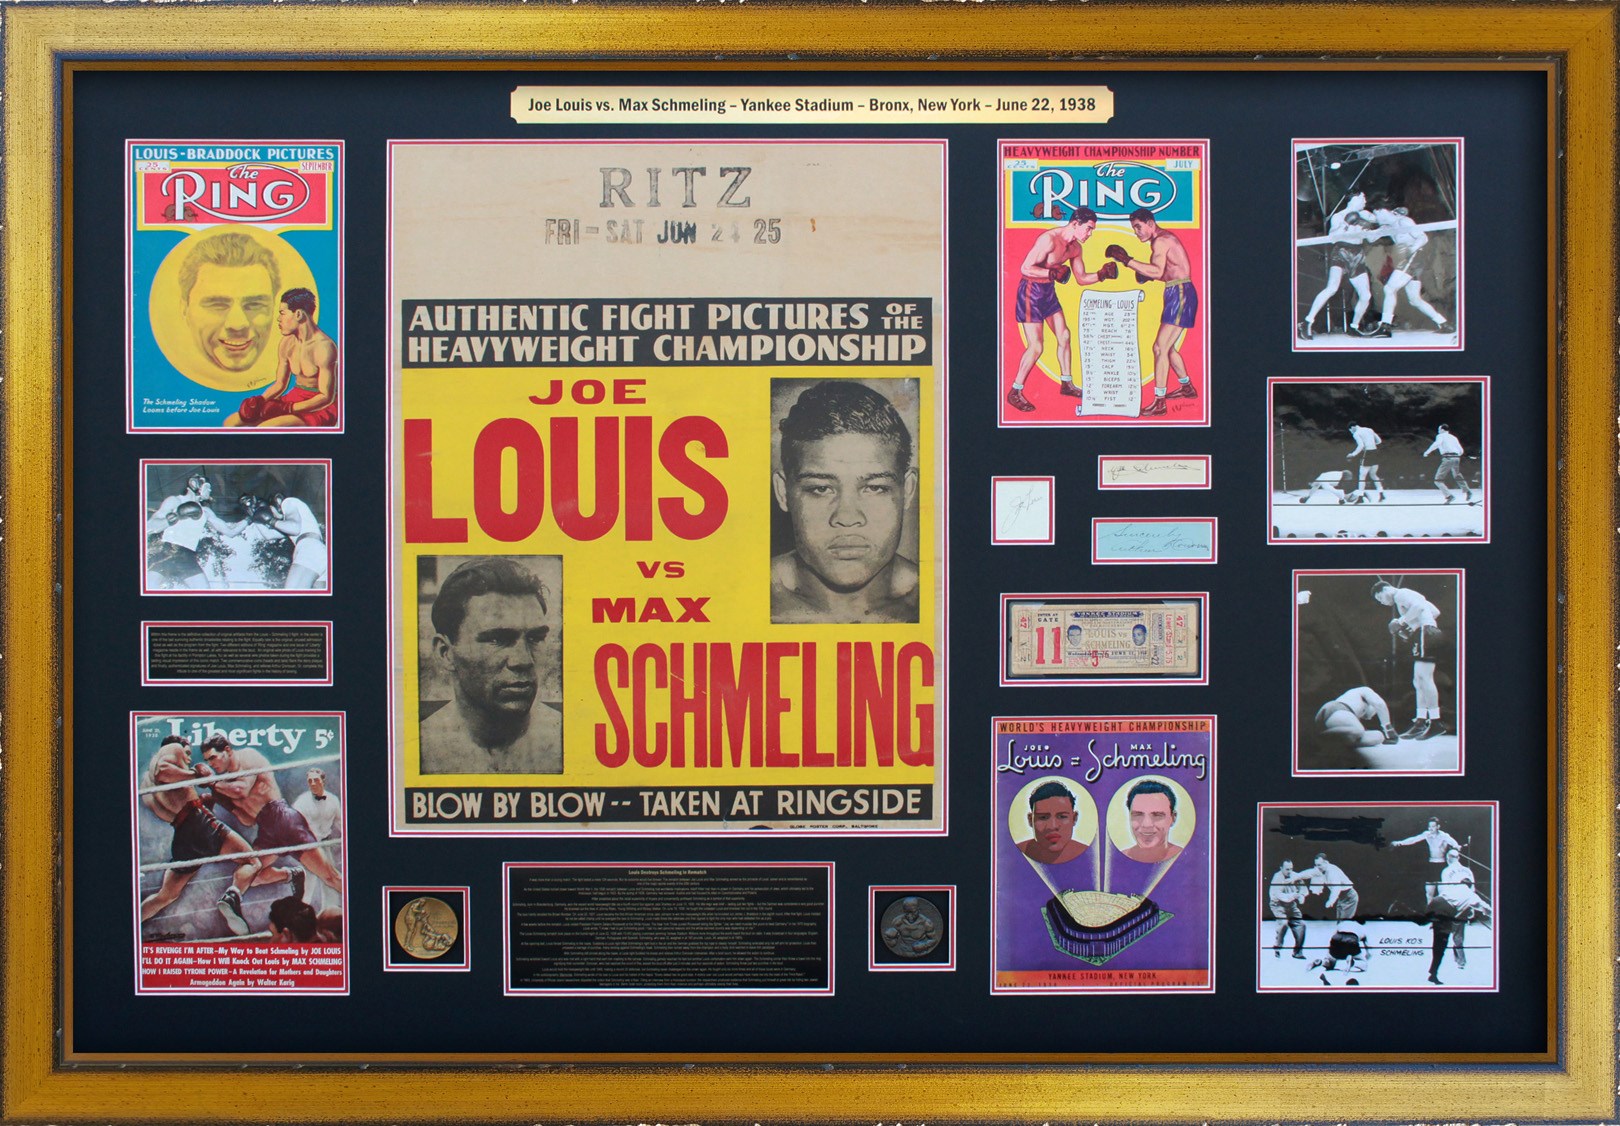 - 1938 Joe Louis vs. Max Schmeling II - Complete with Autographs, Ticket, Program & Broadside